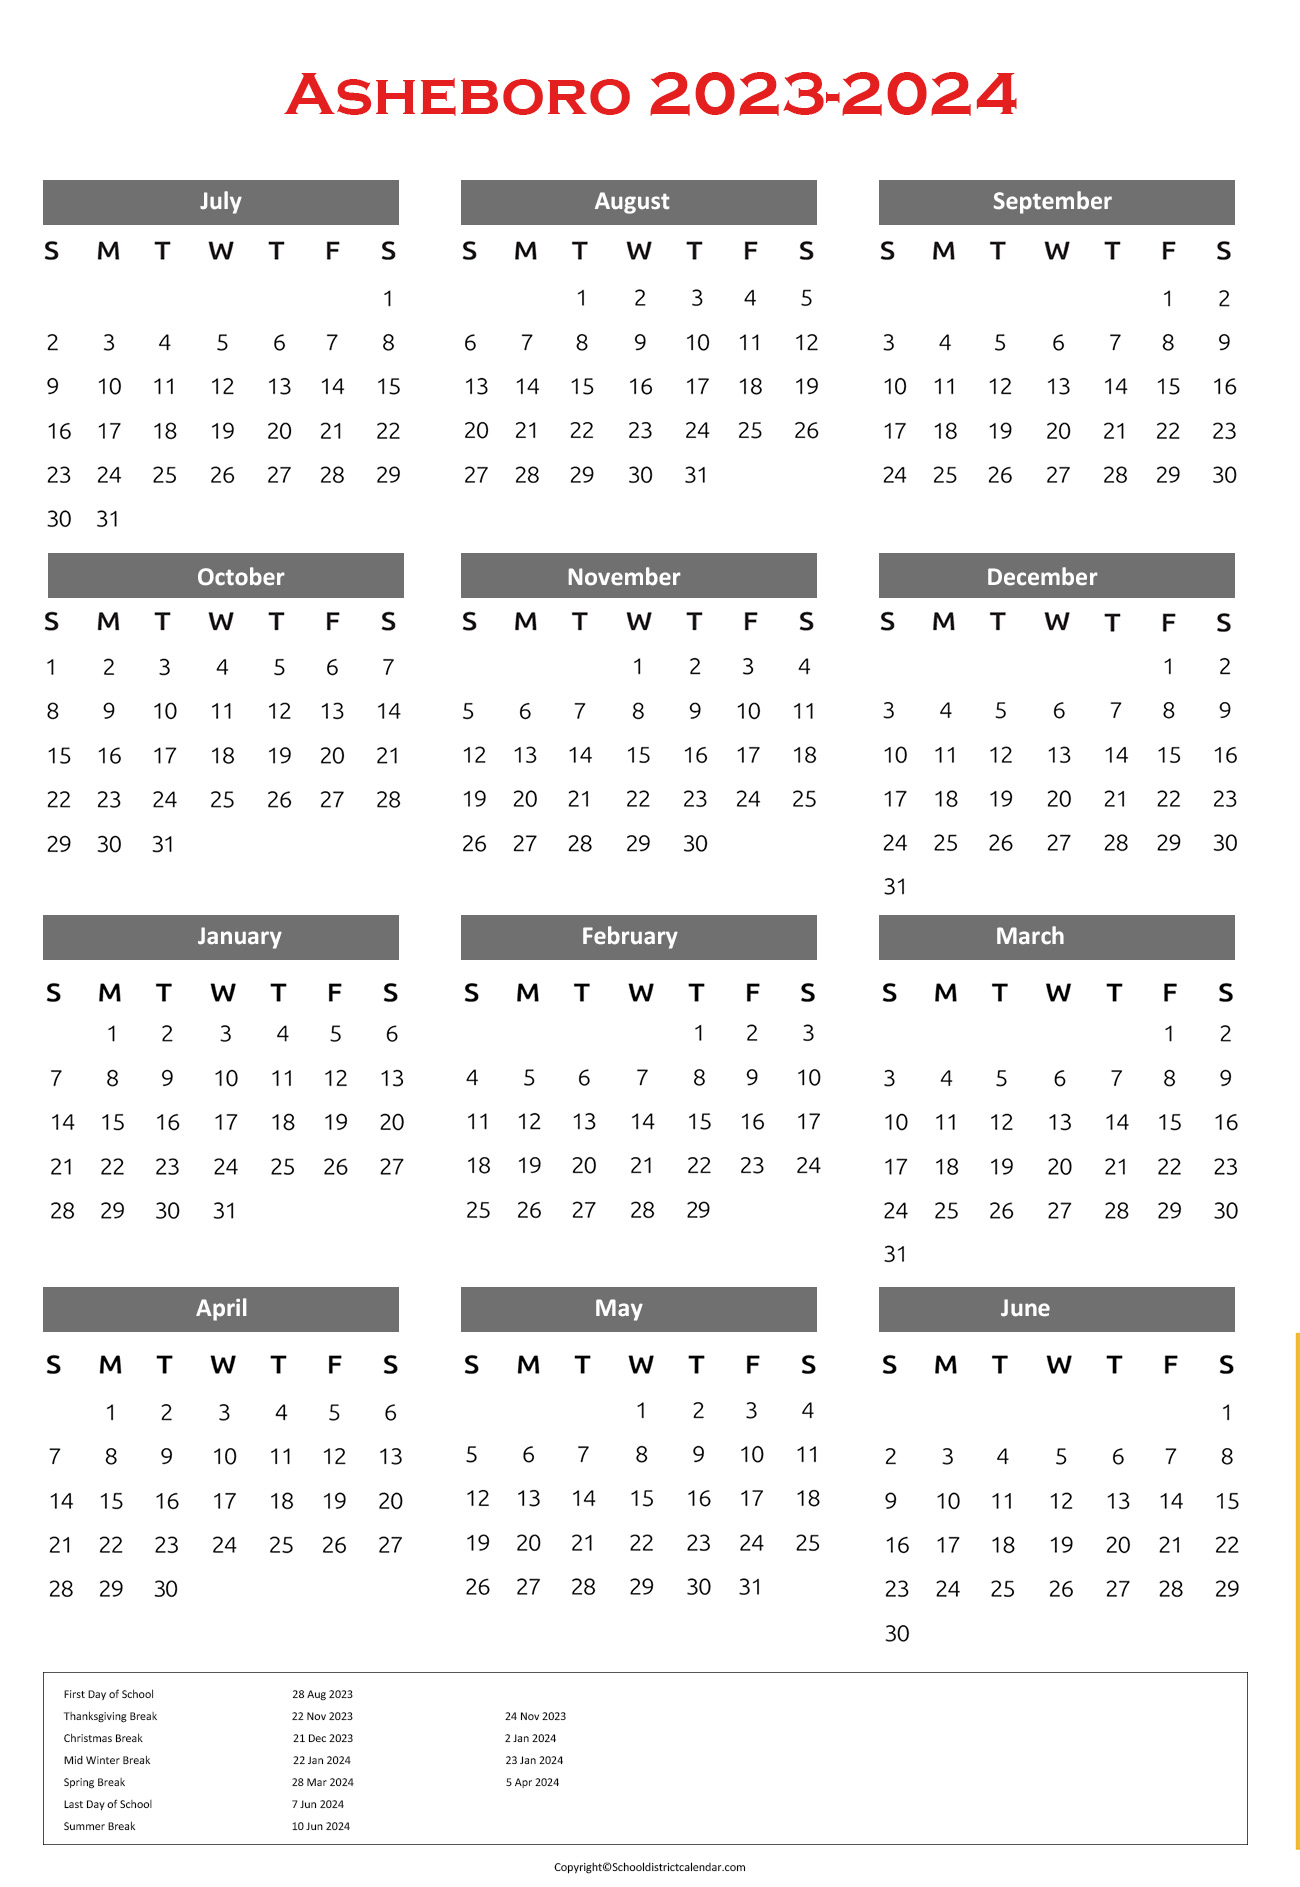 Asheboro City Schools Calendar Holidays 2023-2024